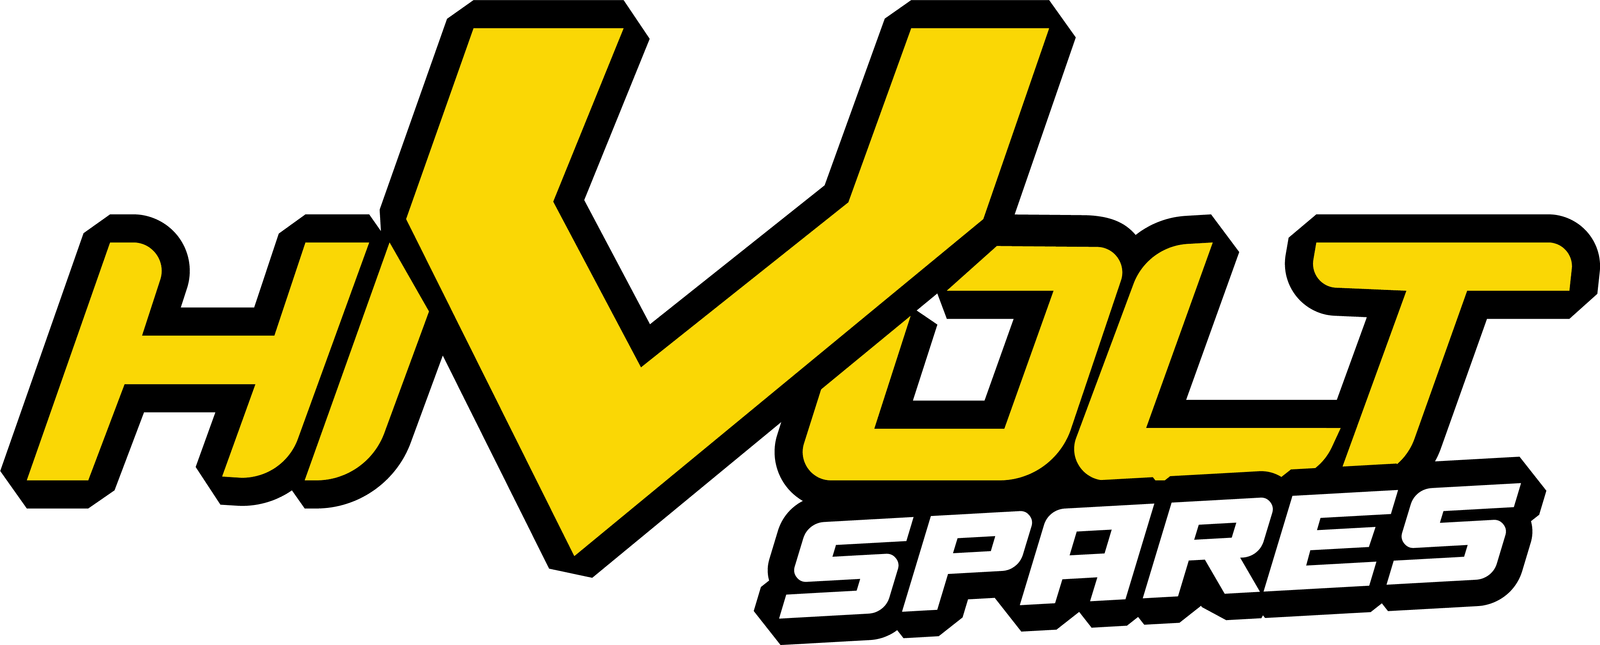 HiVolt Spares